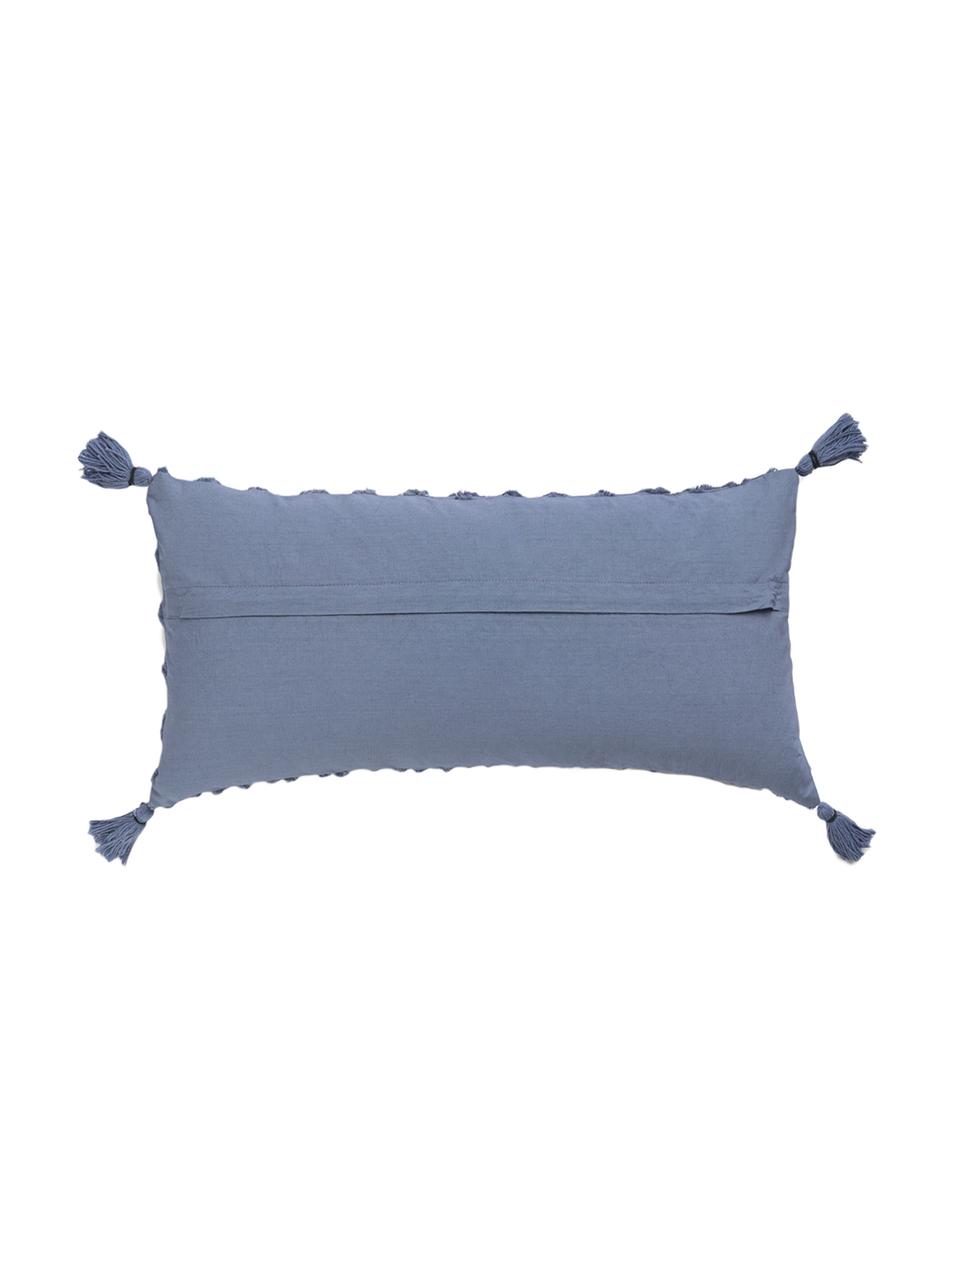 Kissenhülle Royal mit Hoch-Tief-Muster, 100% Baumwolle, Blau, 30 x 60 cm